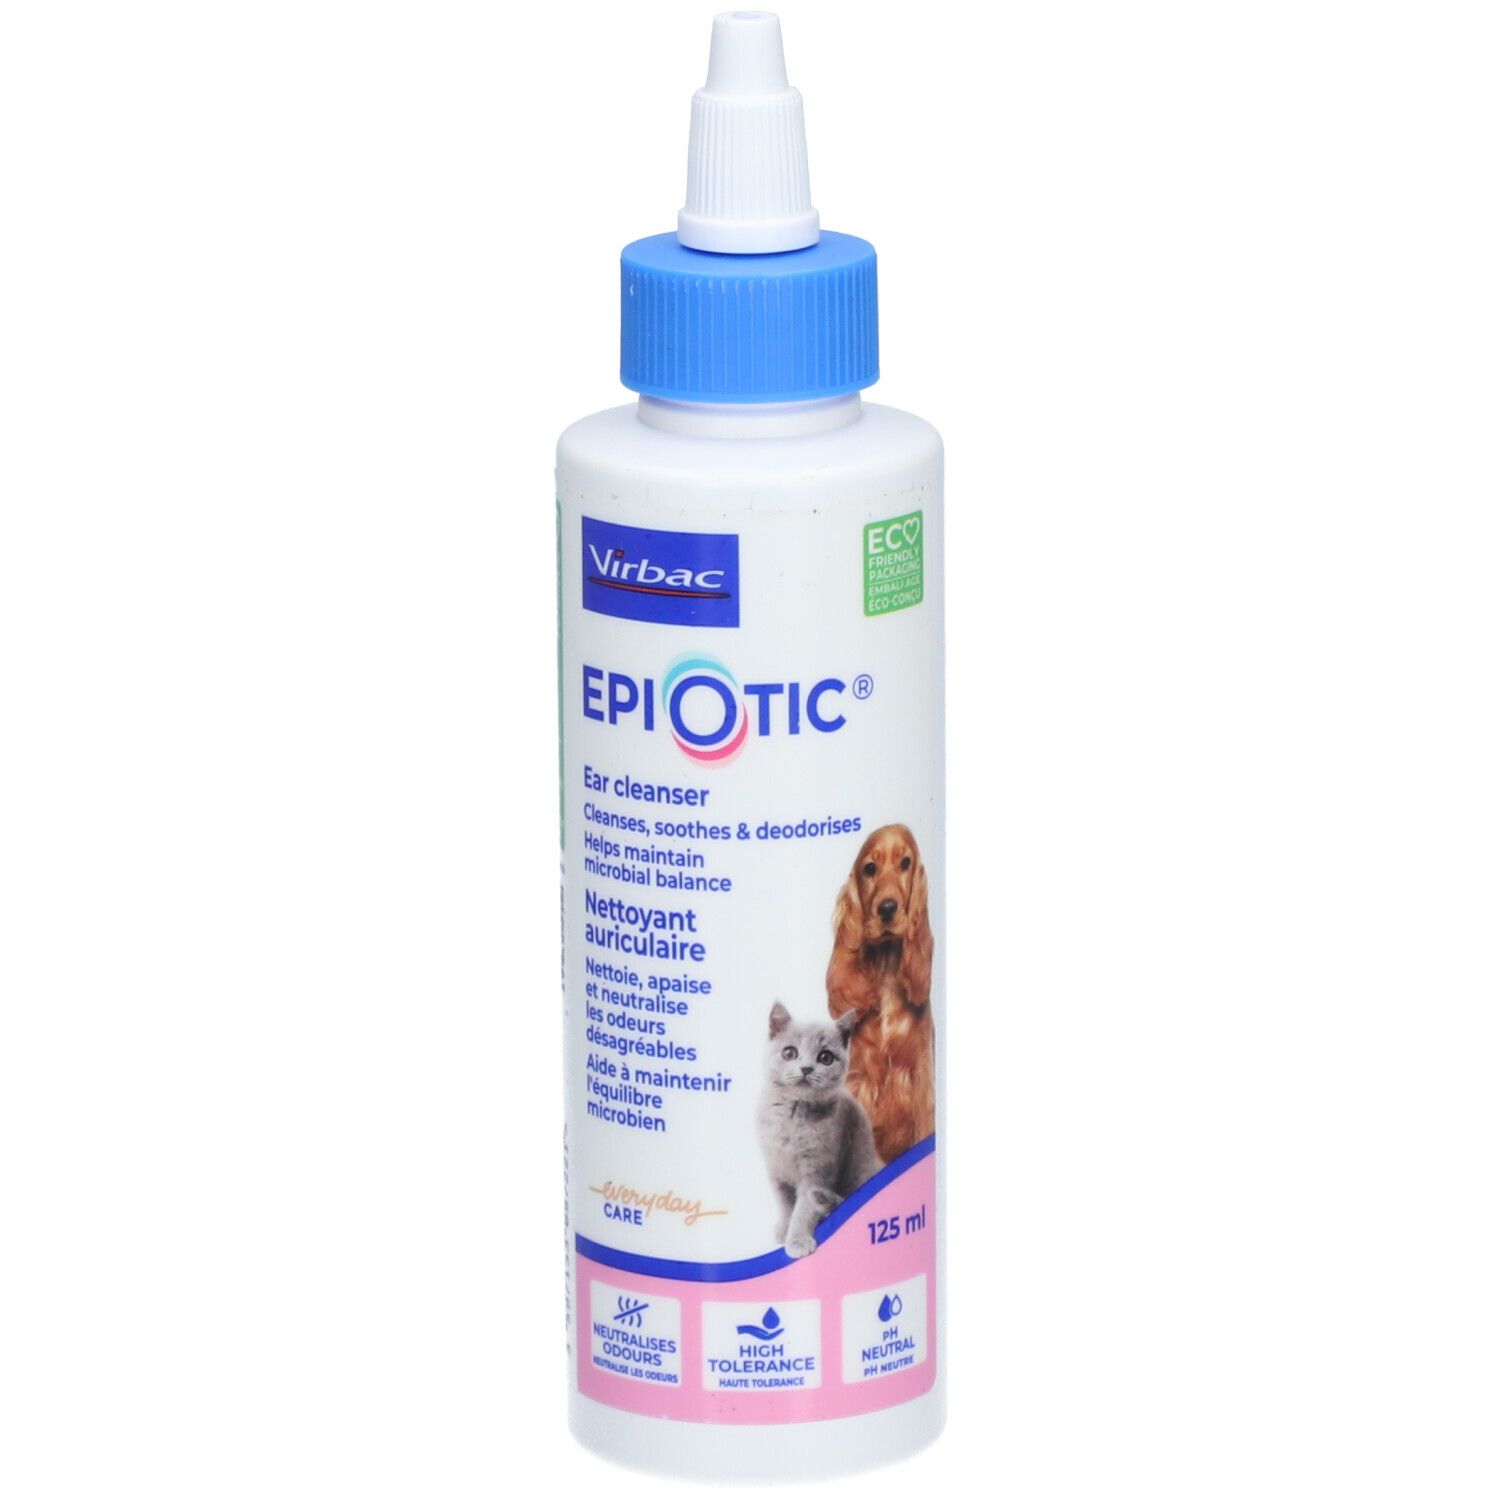 Virbac EpiOtic® Nettoyant auriculaire